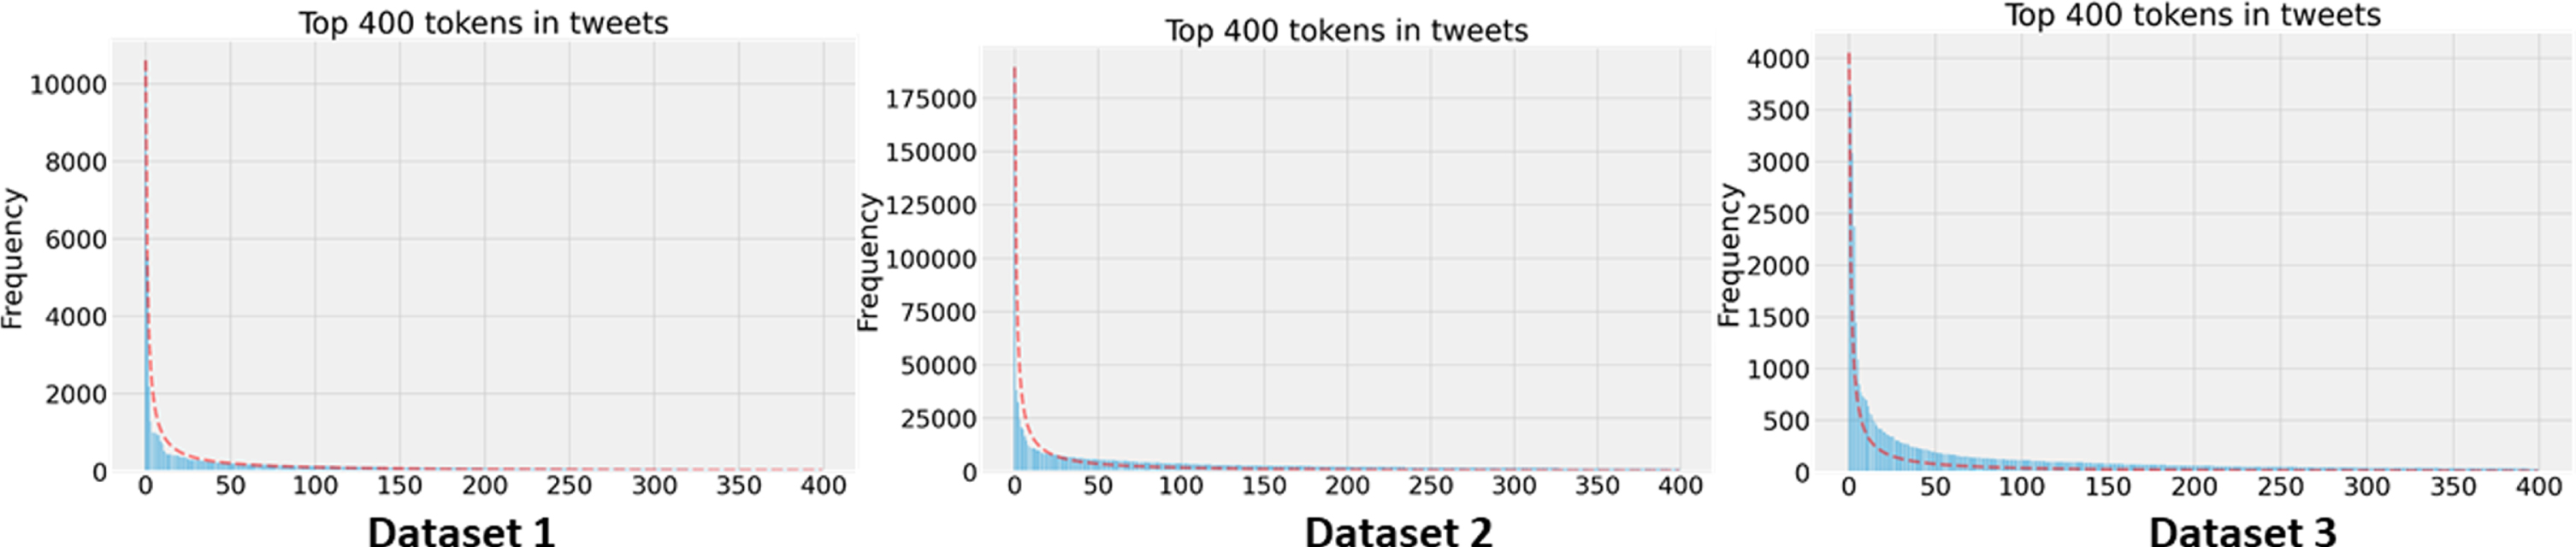 Tweet distribution across the datasets.